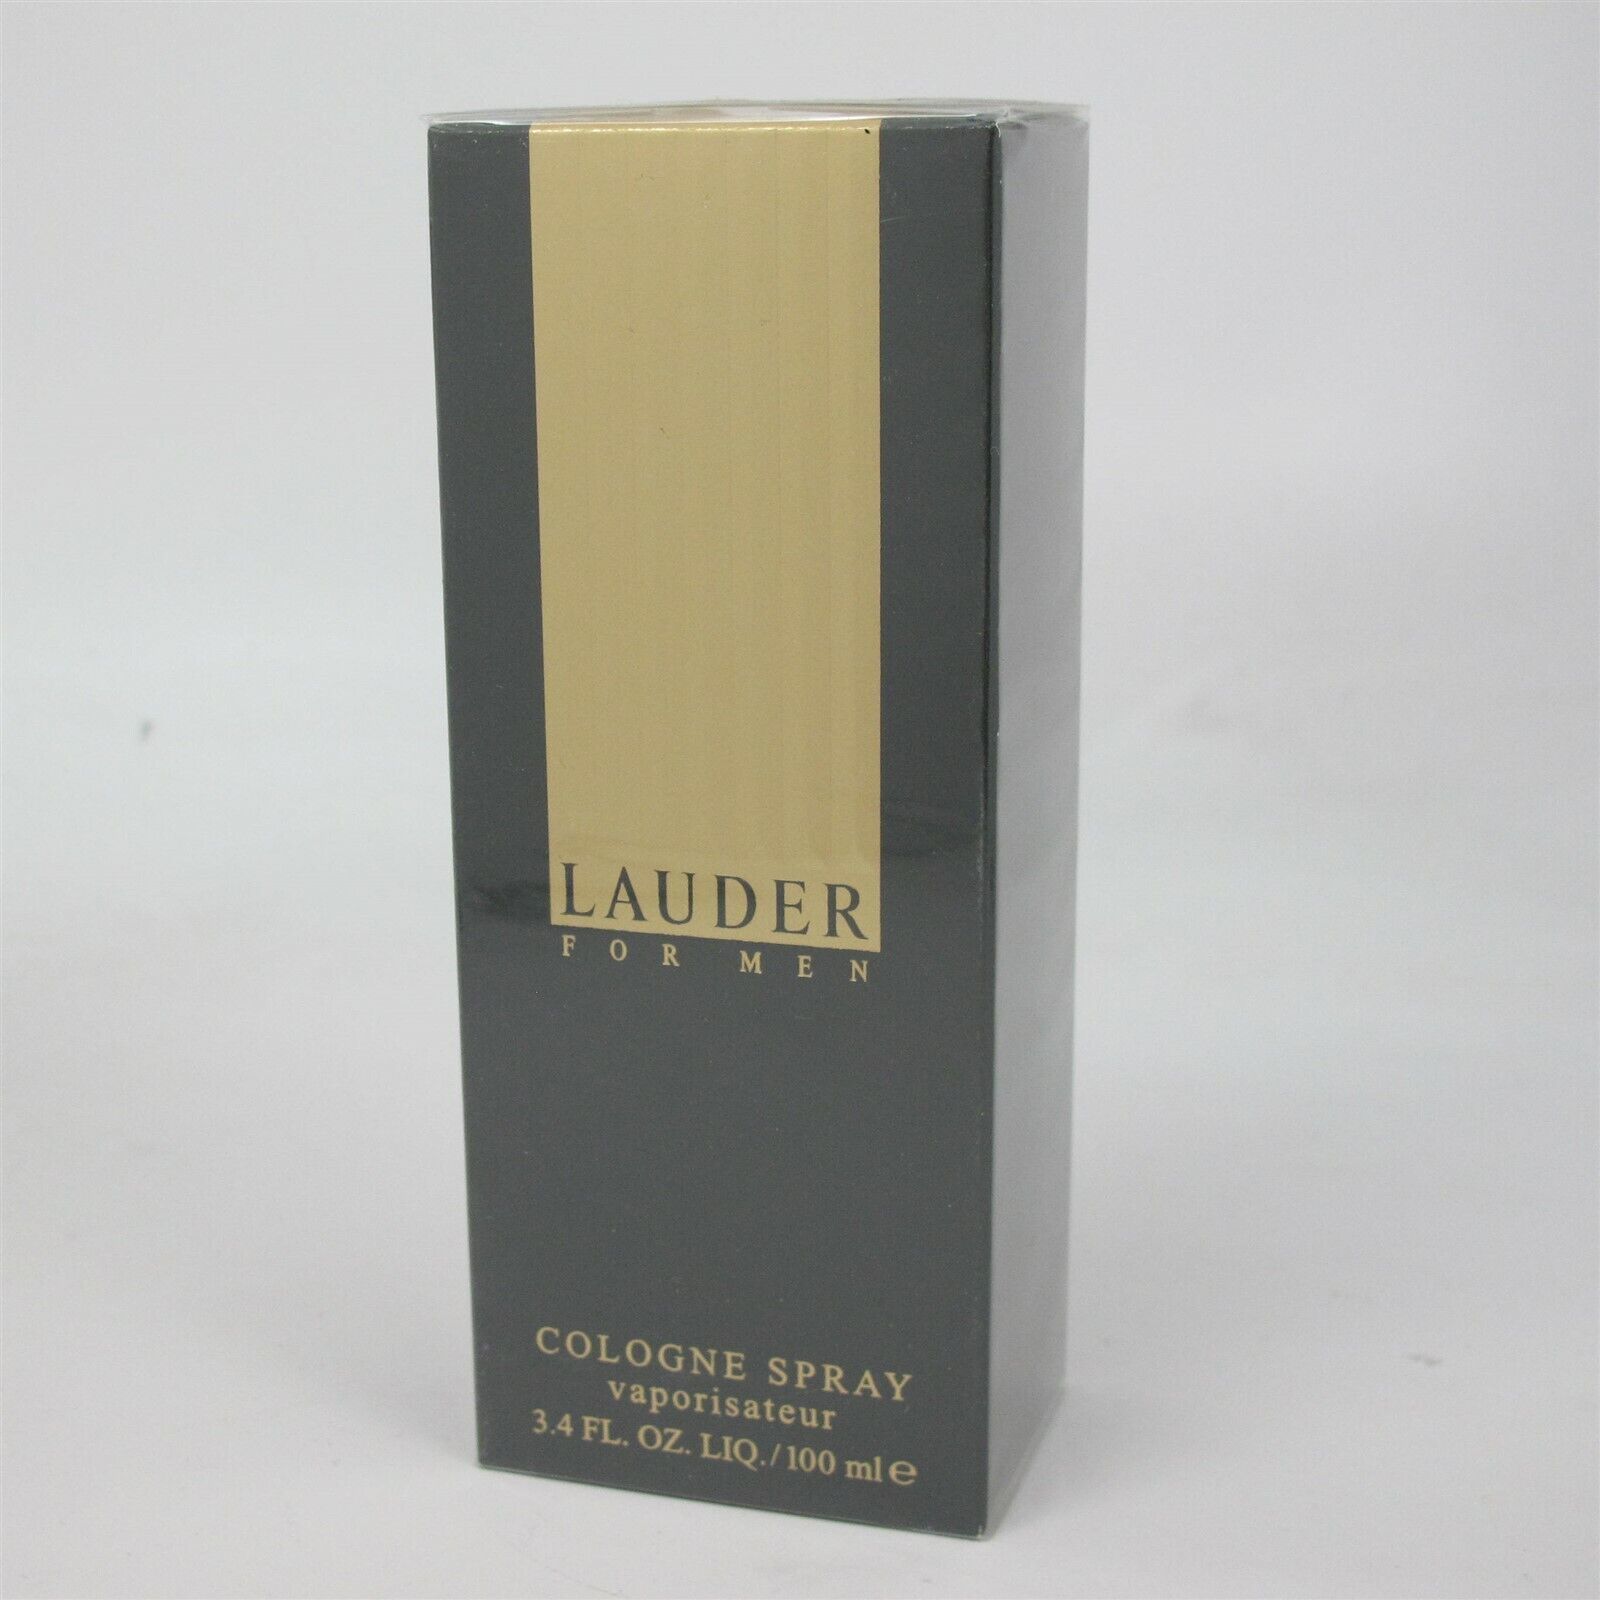 LAUDER FOR MEN by Estee Lauder 100 ml/ 3.4 oz Cologne Spray NIB - $128.69